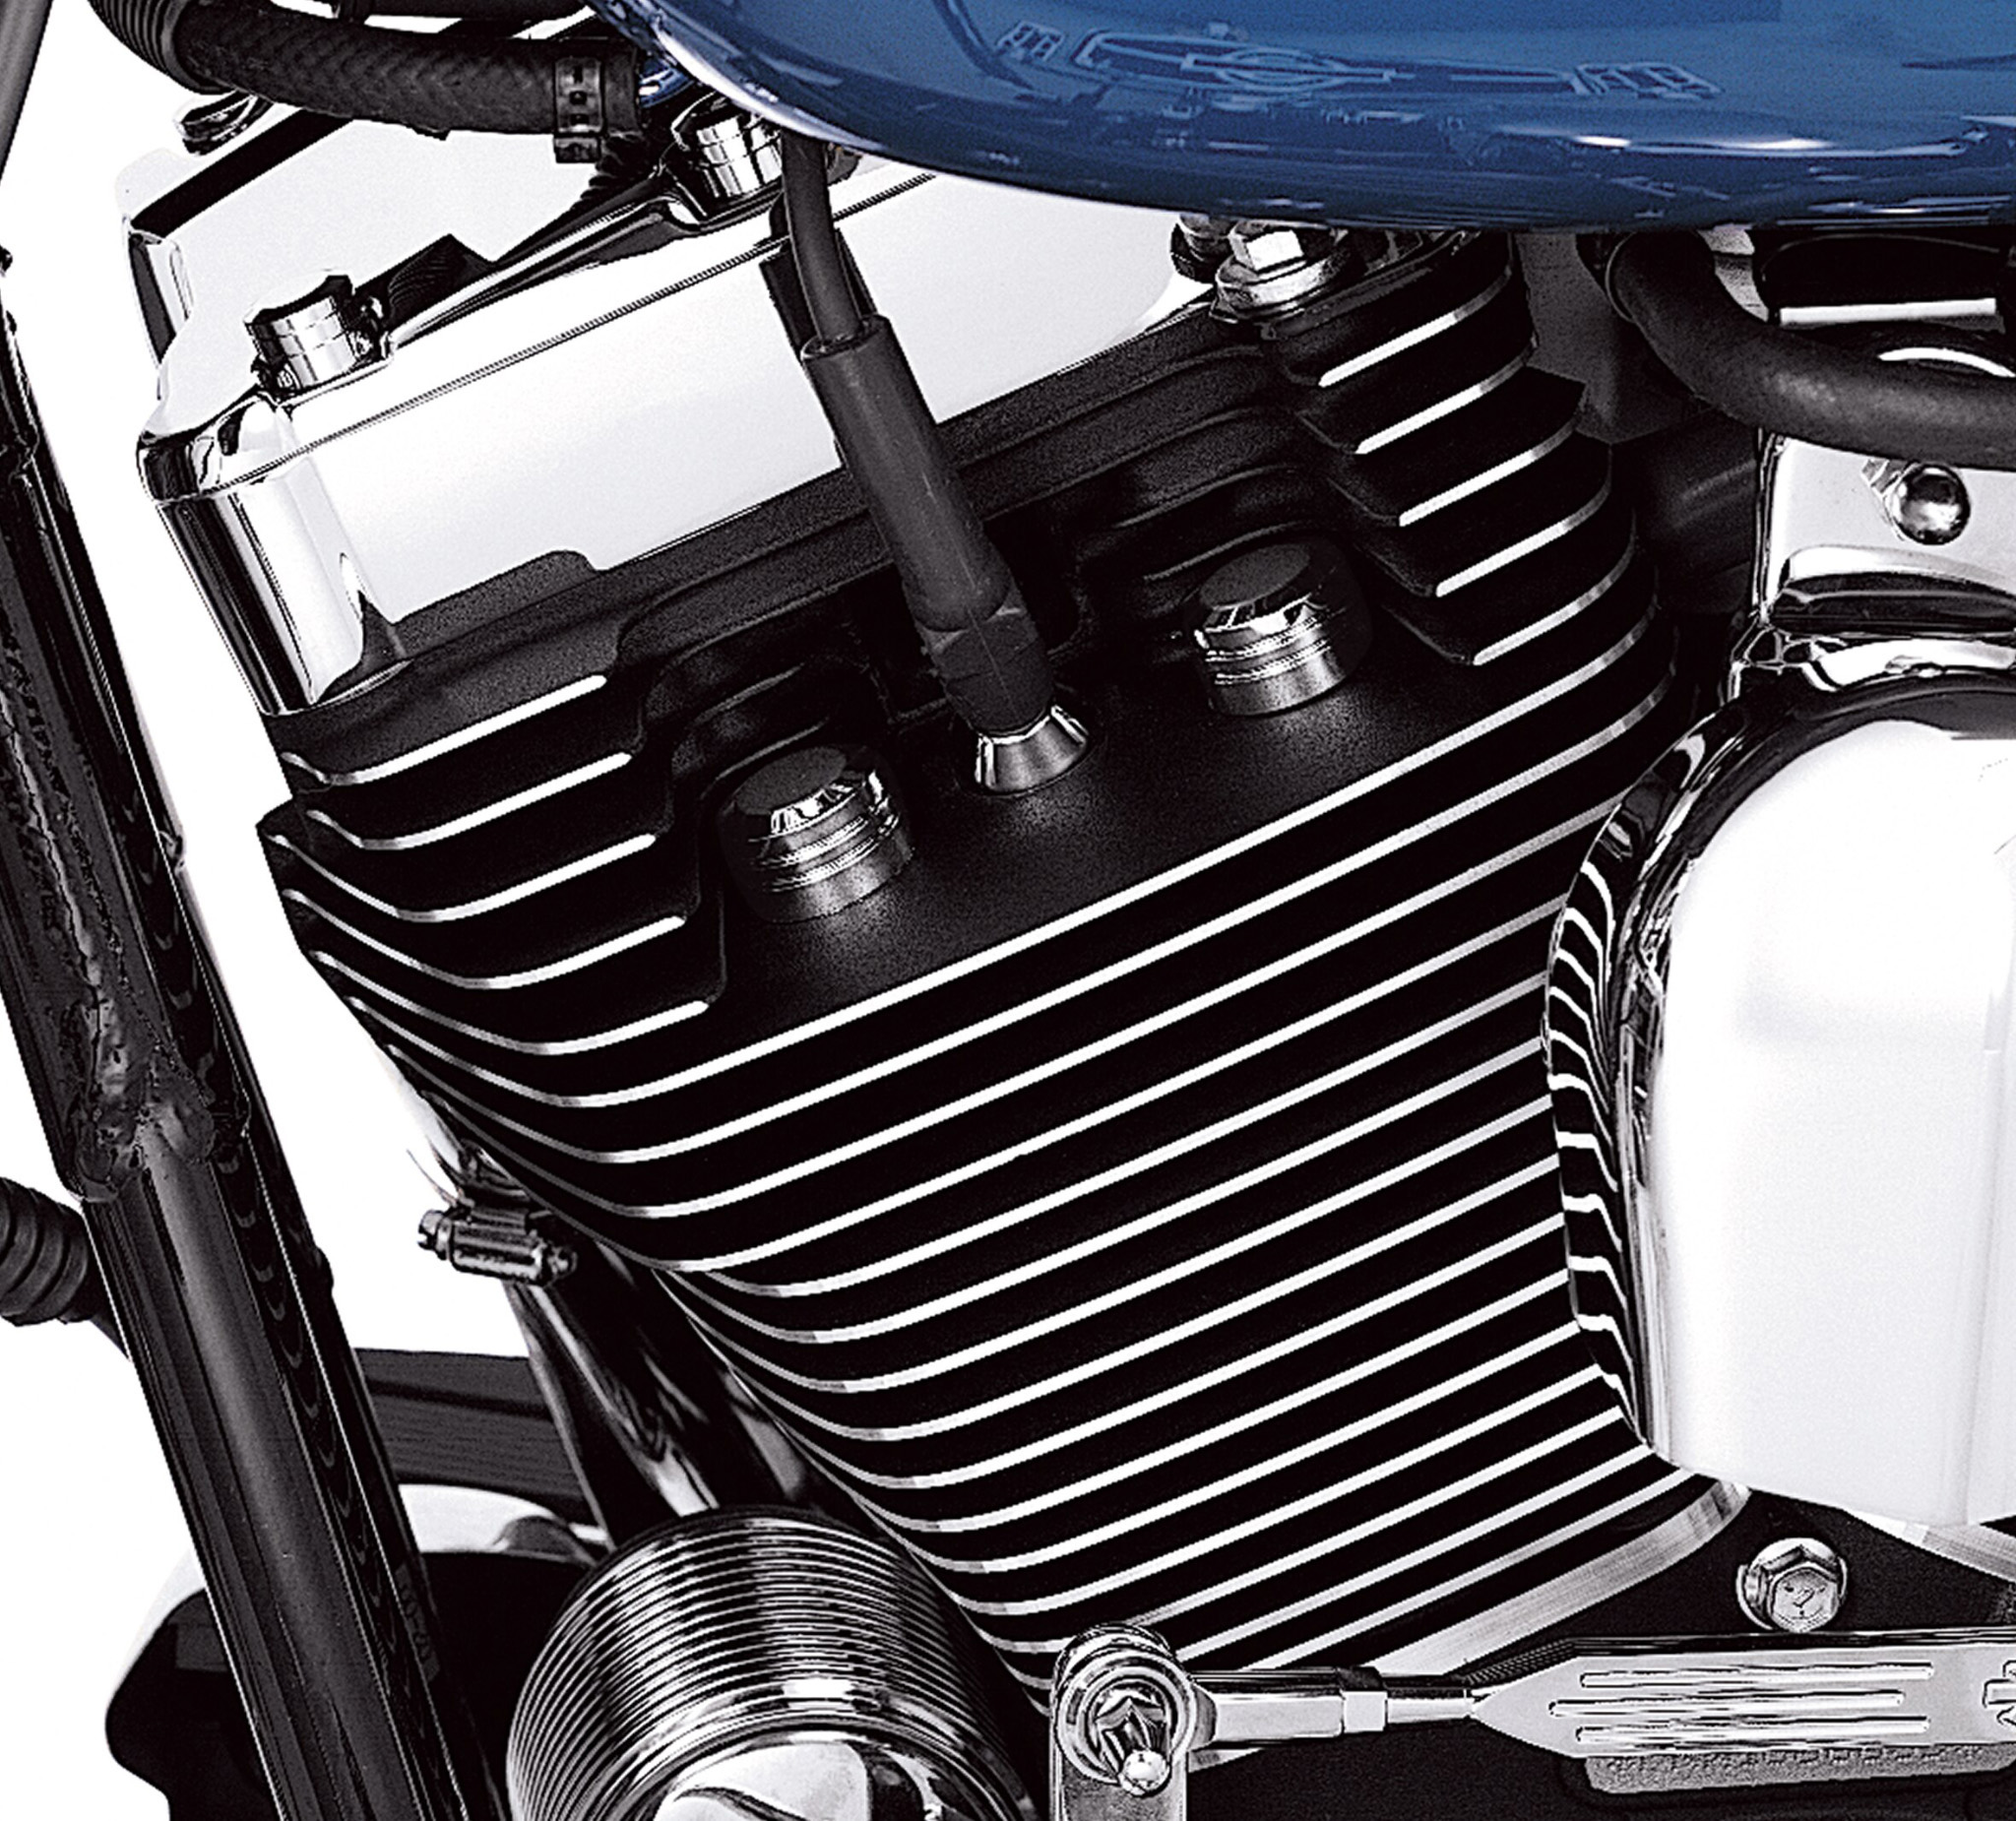 Black Skull Spark Plug Head Bolt Covers for Harley Sportster XL 1200 883 04-up